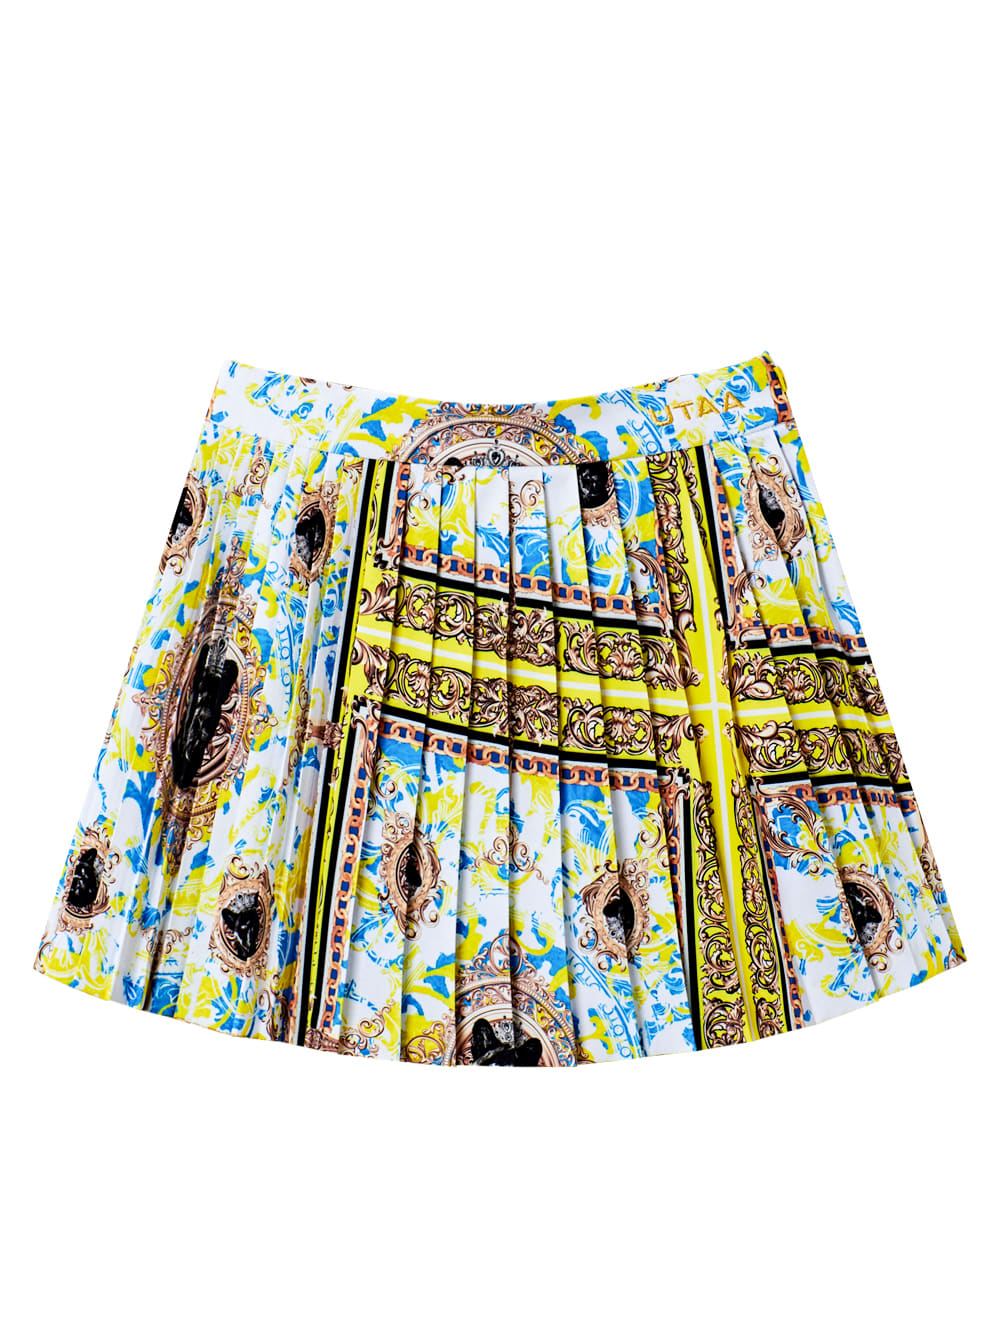 UTAA Neon Buckingham Pleats Skirt : Yellow (UB3SKF271YE)